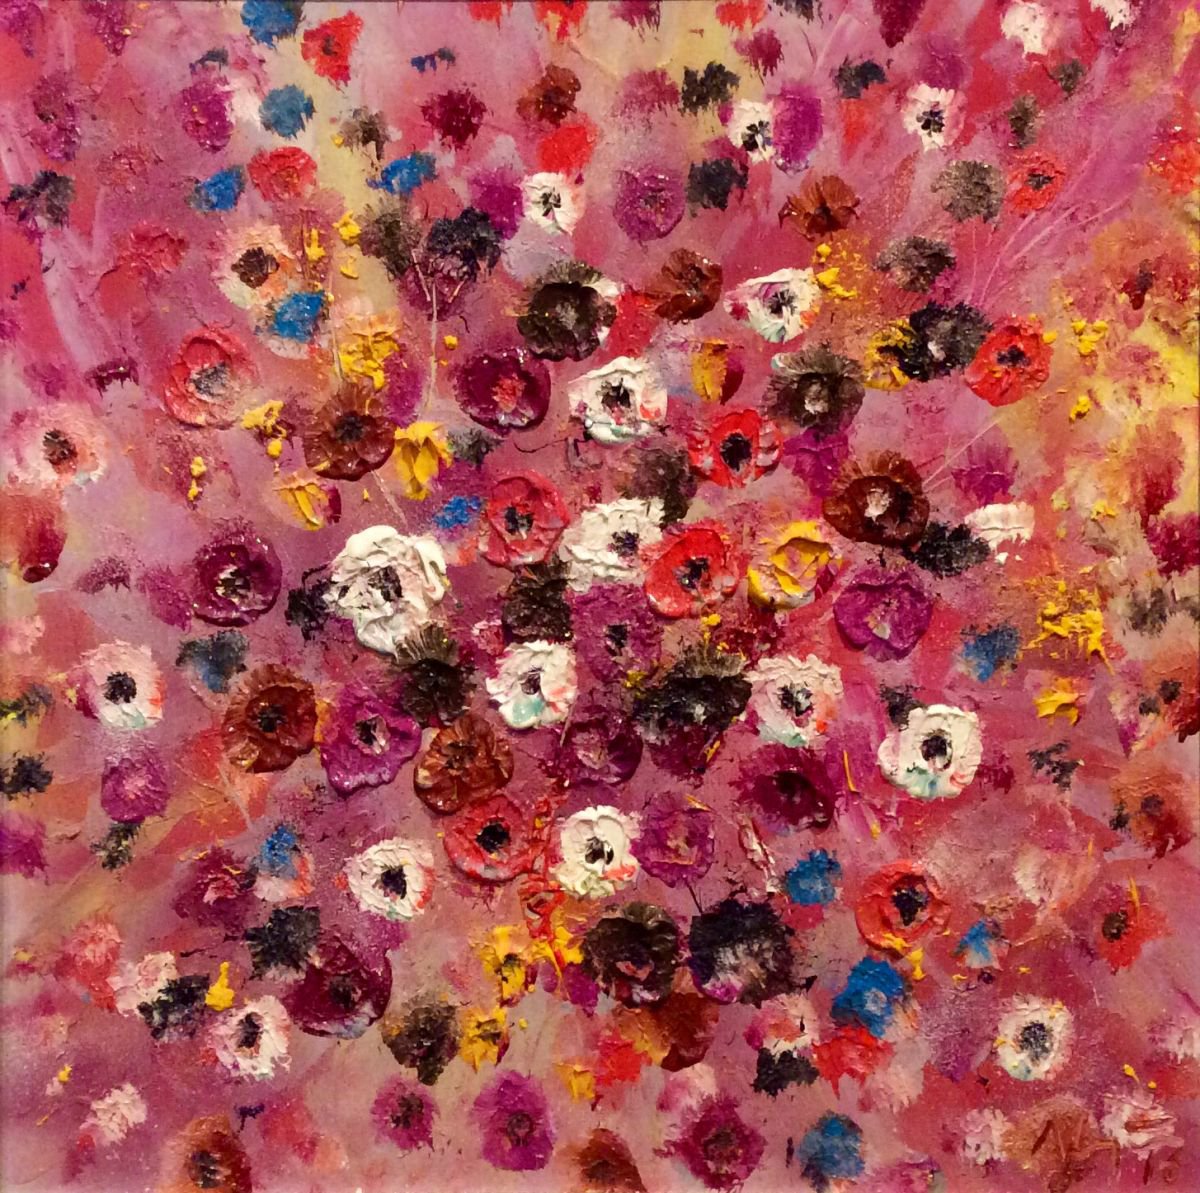 Ocean of flowers XVI by Alejos - Pop Art landscapes